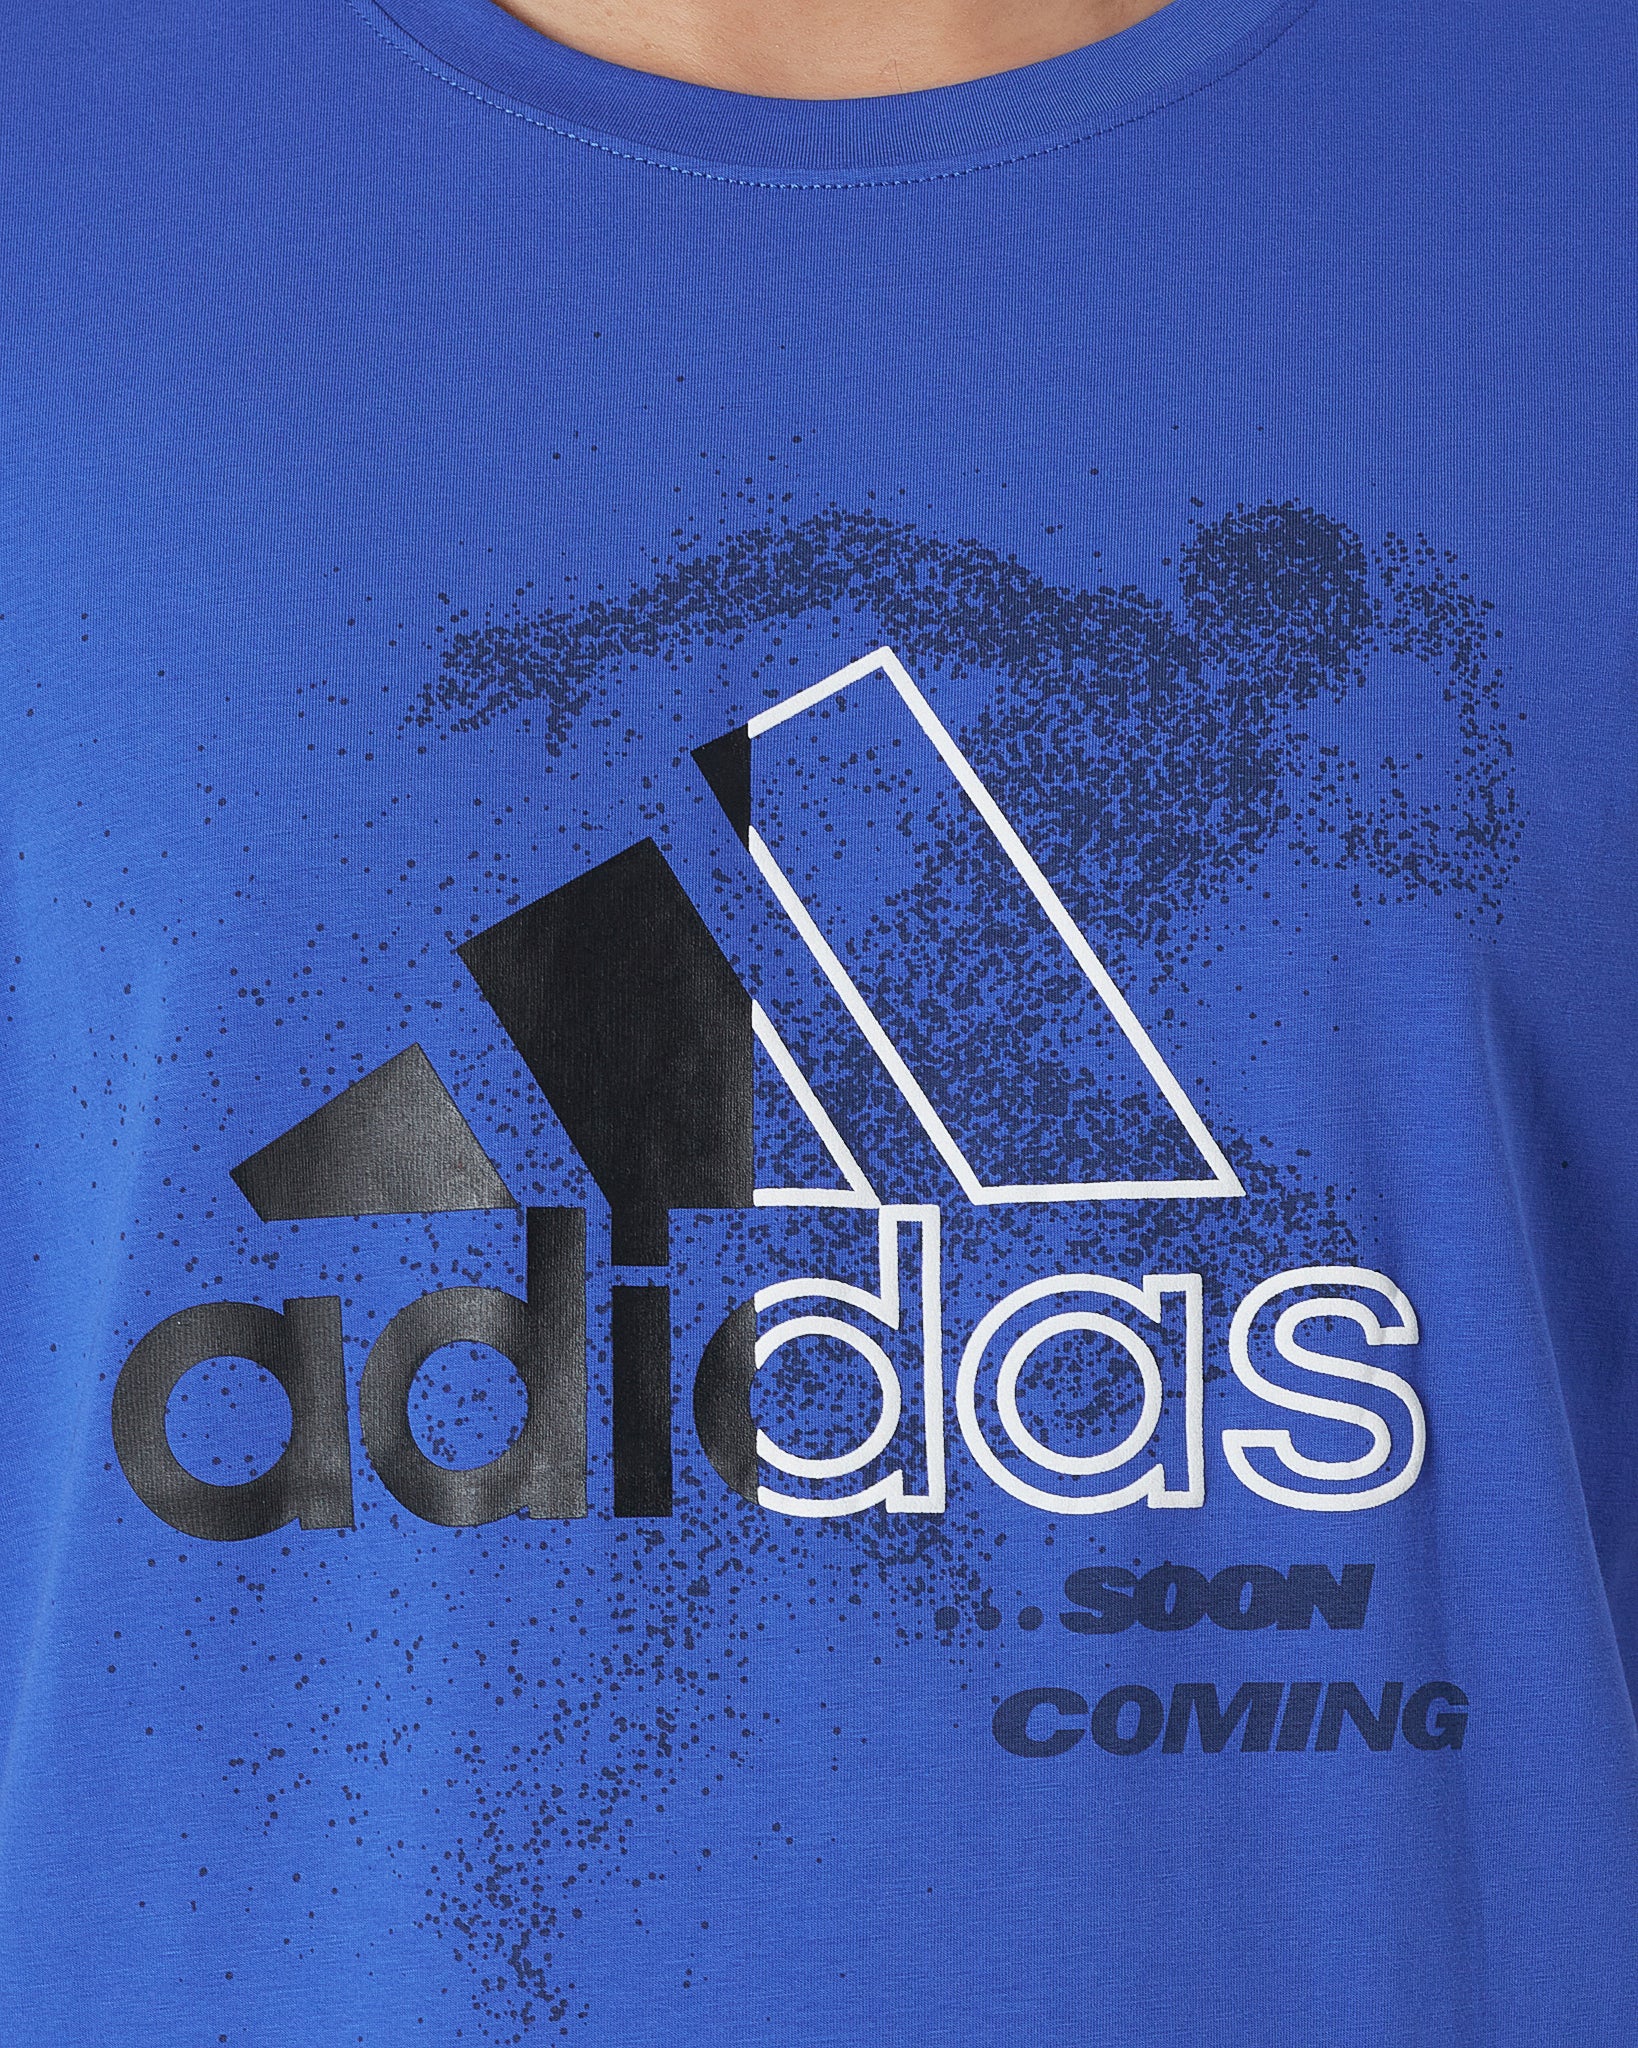 ADI Logo Printed Men Blue T-Shirt 13.90